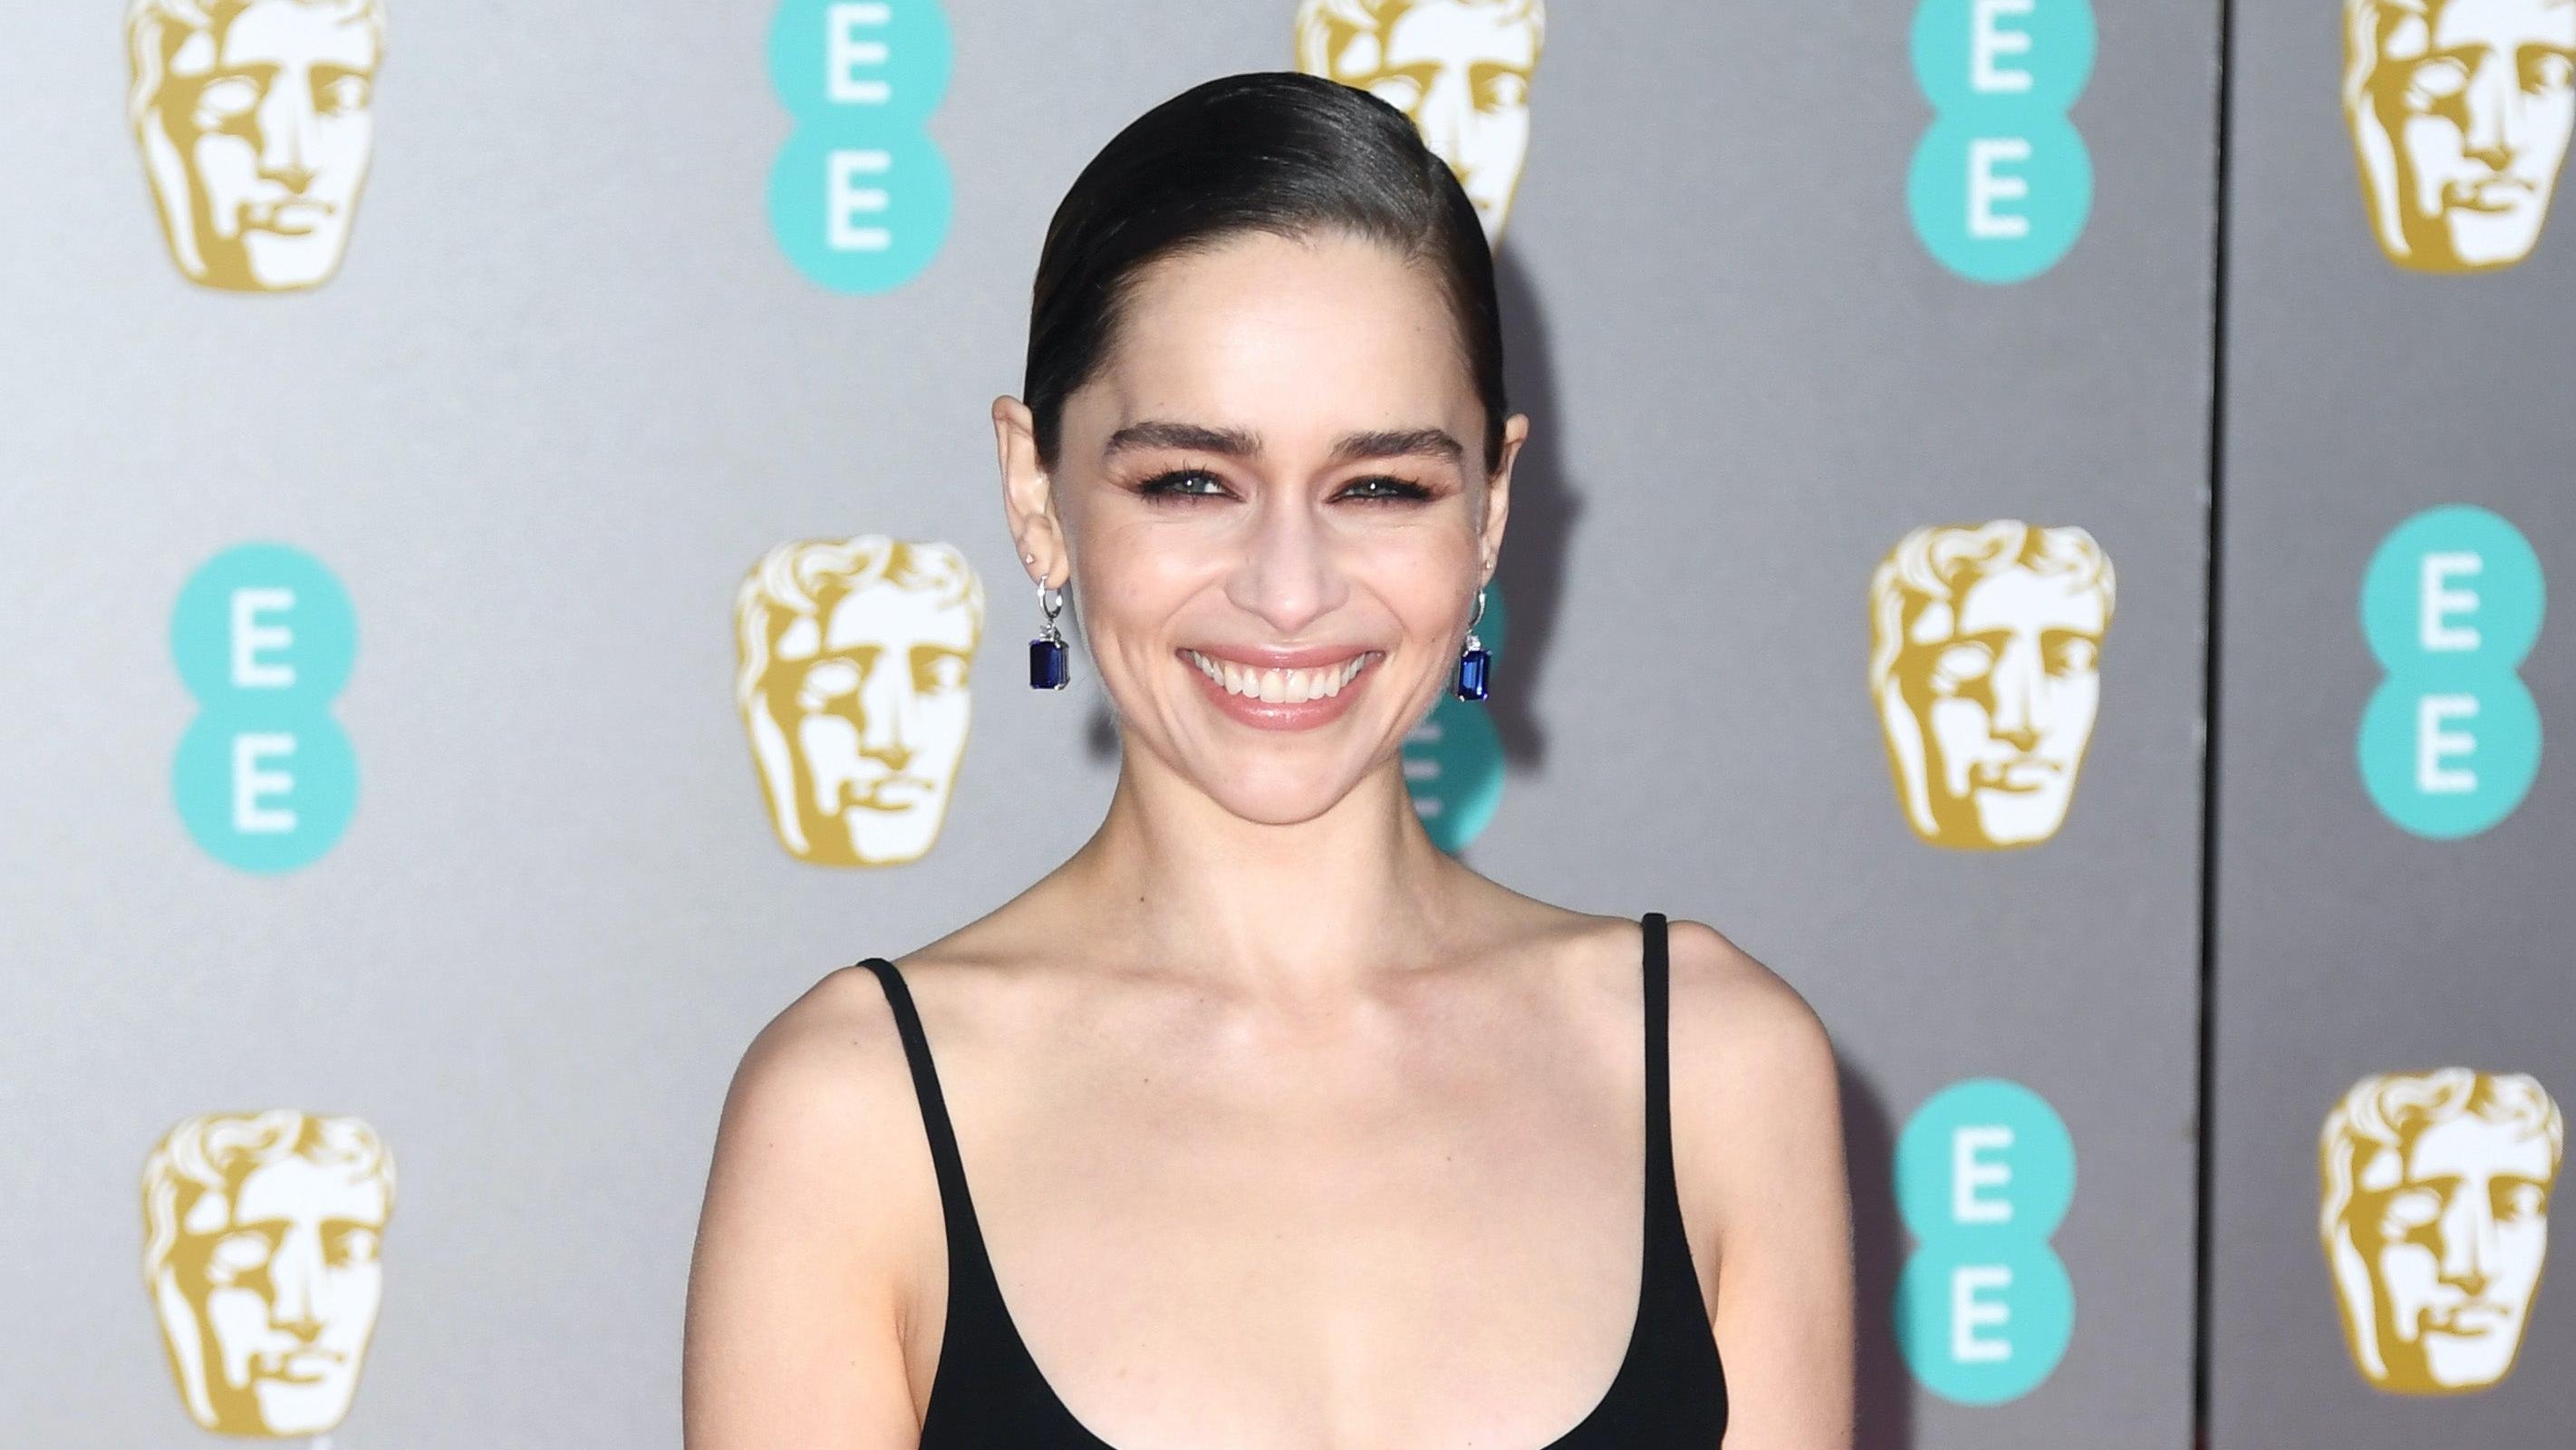 Emilia Clarke recalls her “catastrophic failure” Broadway debut in Breakfast At Tiffany’s